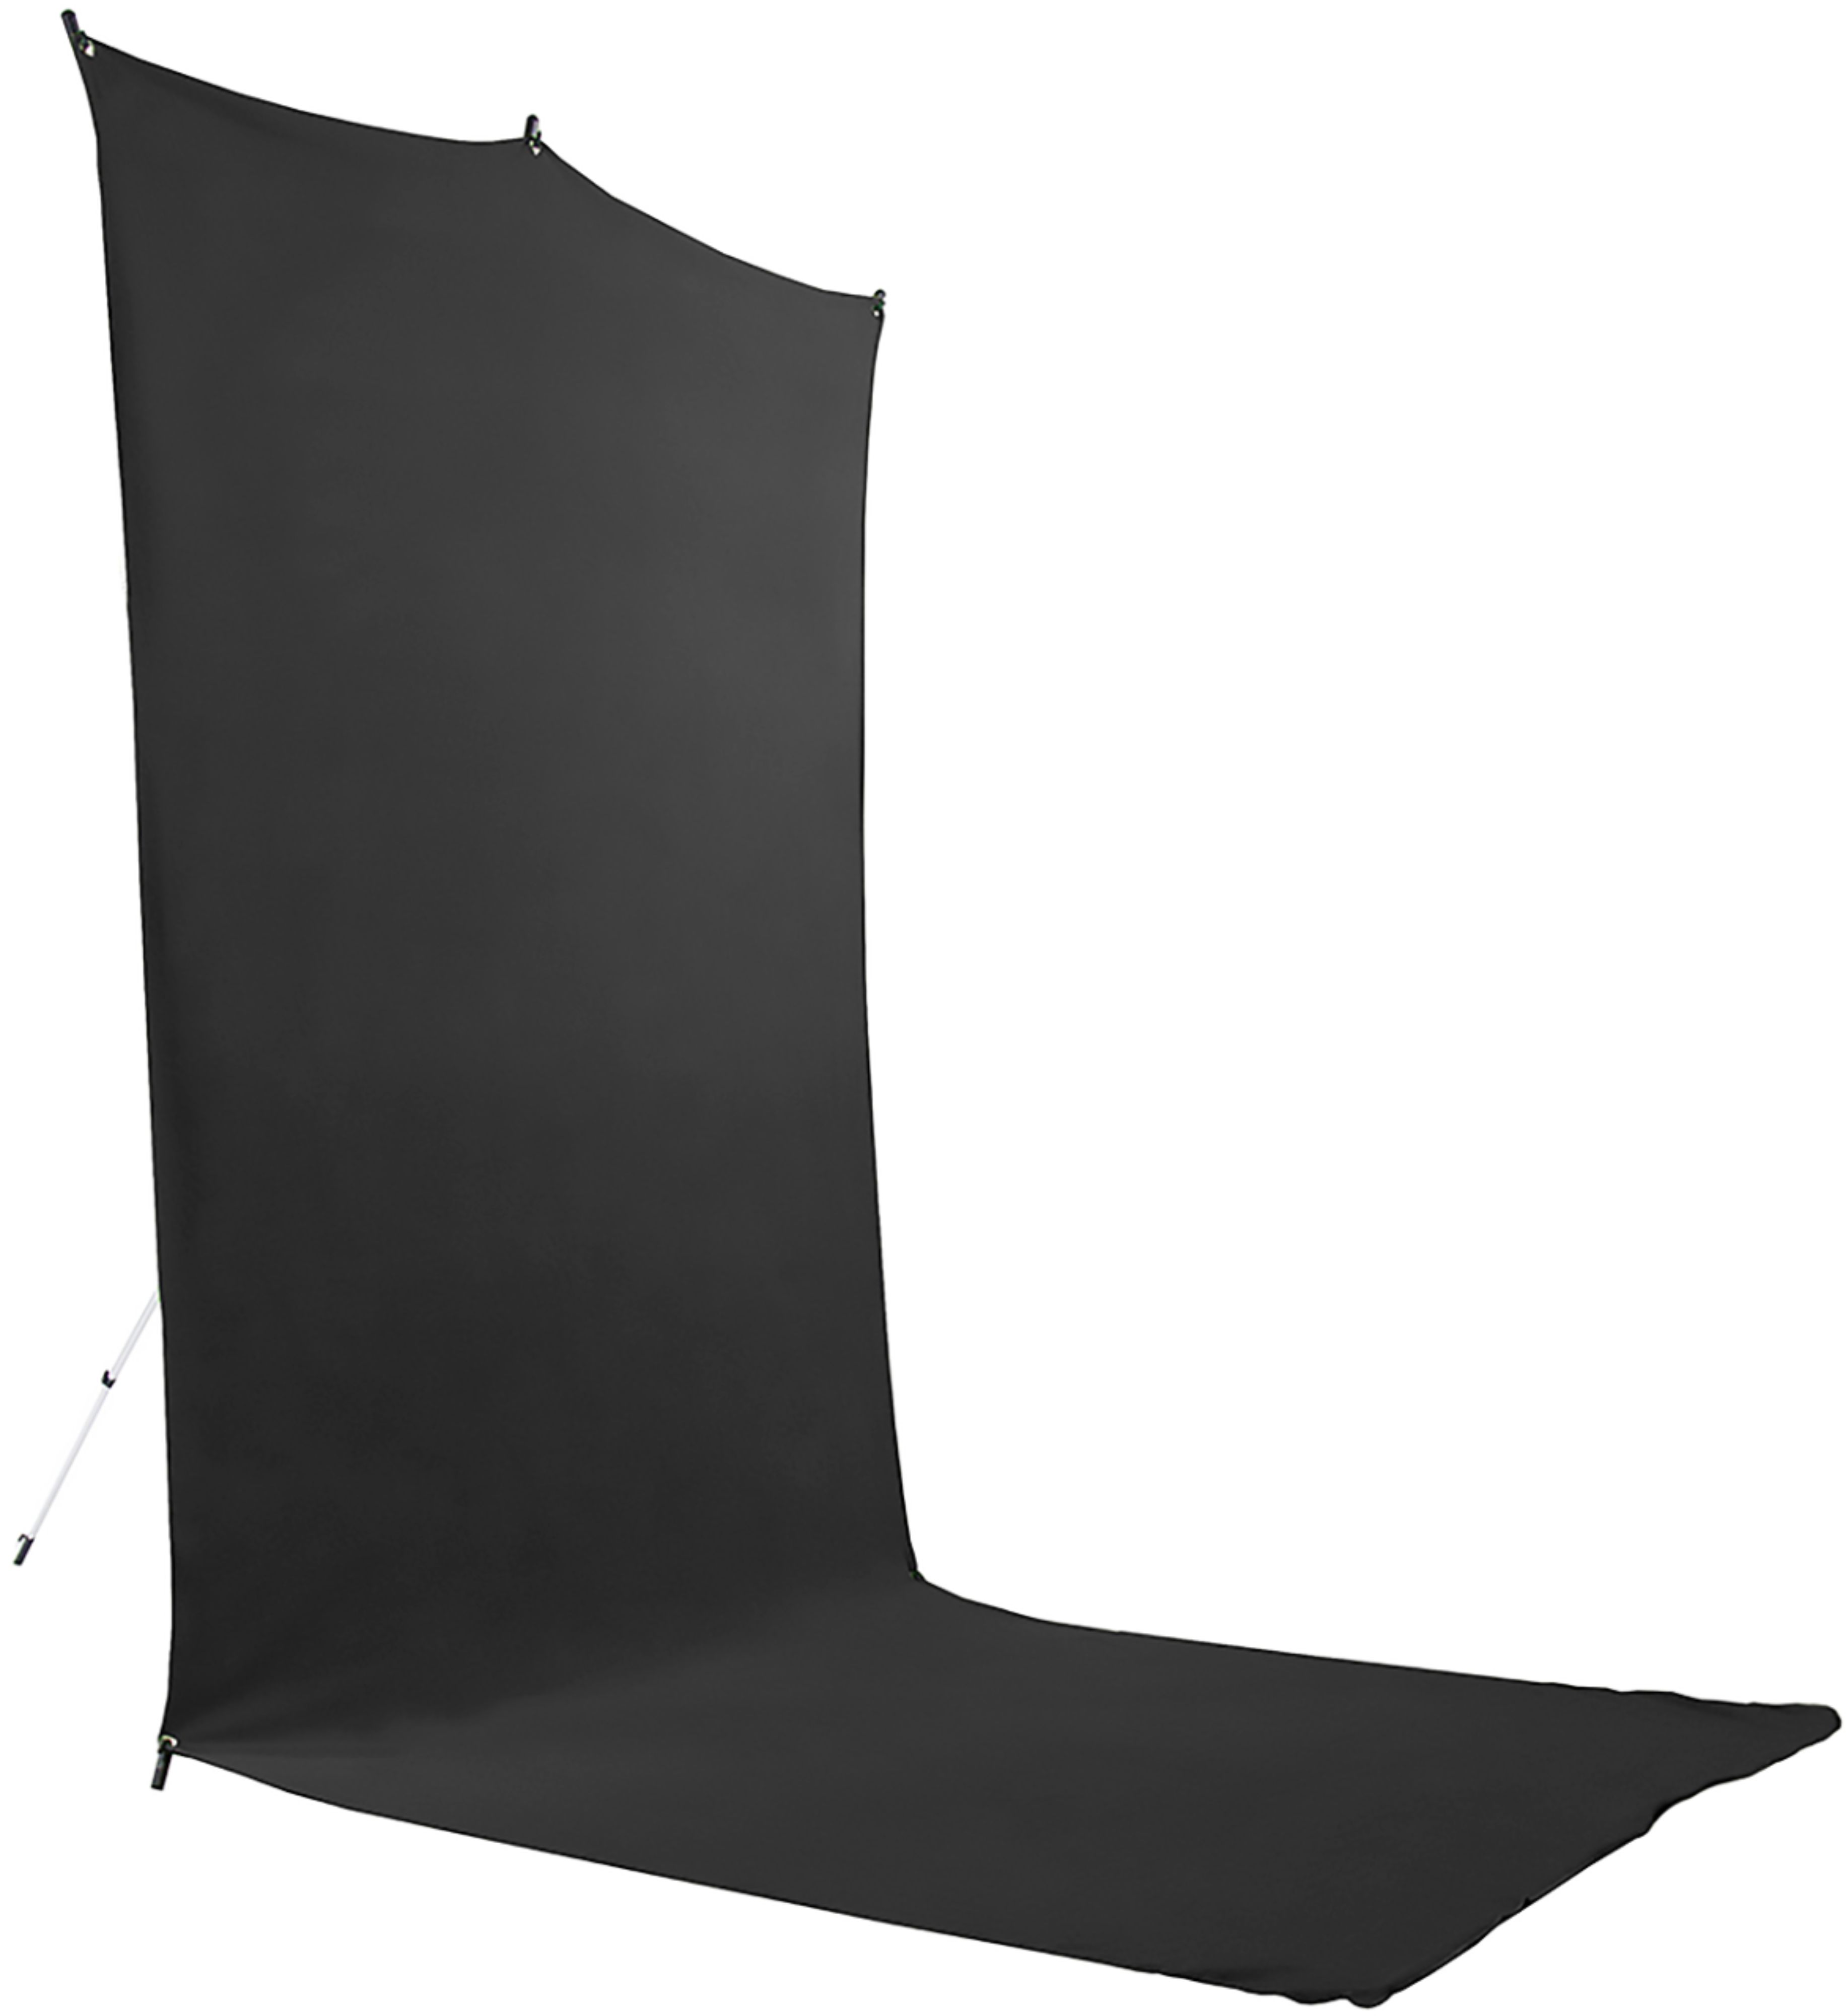 Angle View: Savage Universal - 5' x 12' Black Photo Backdrop - Black